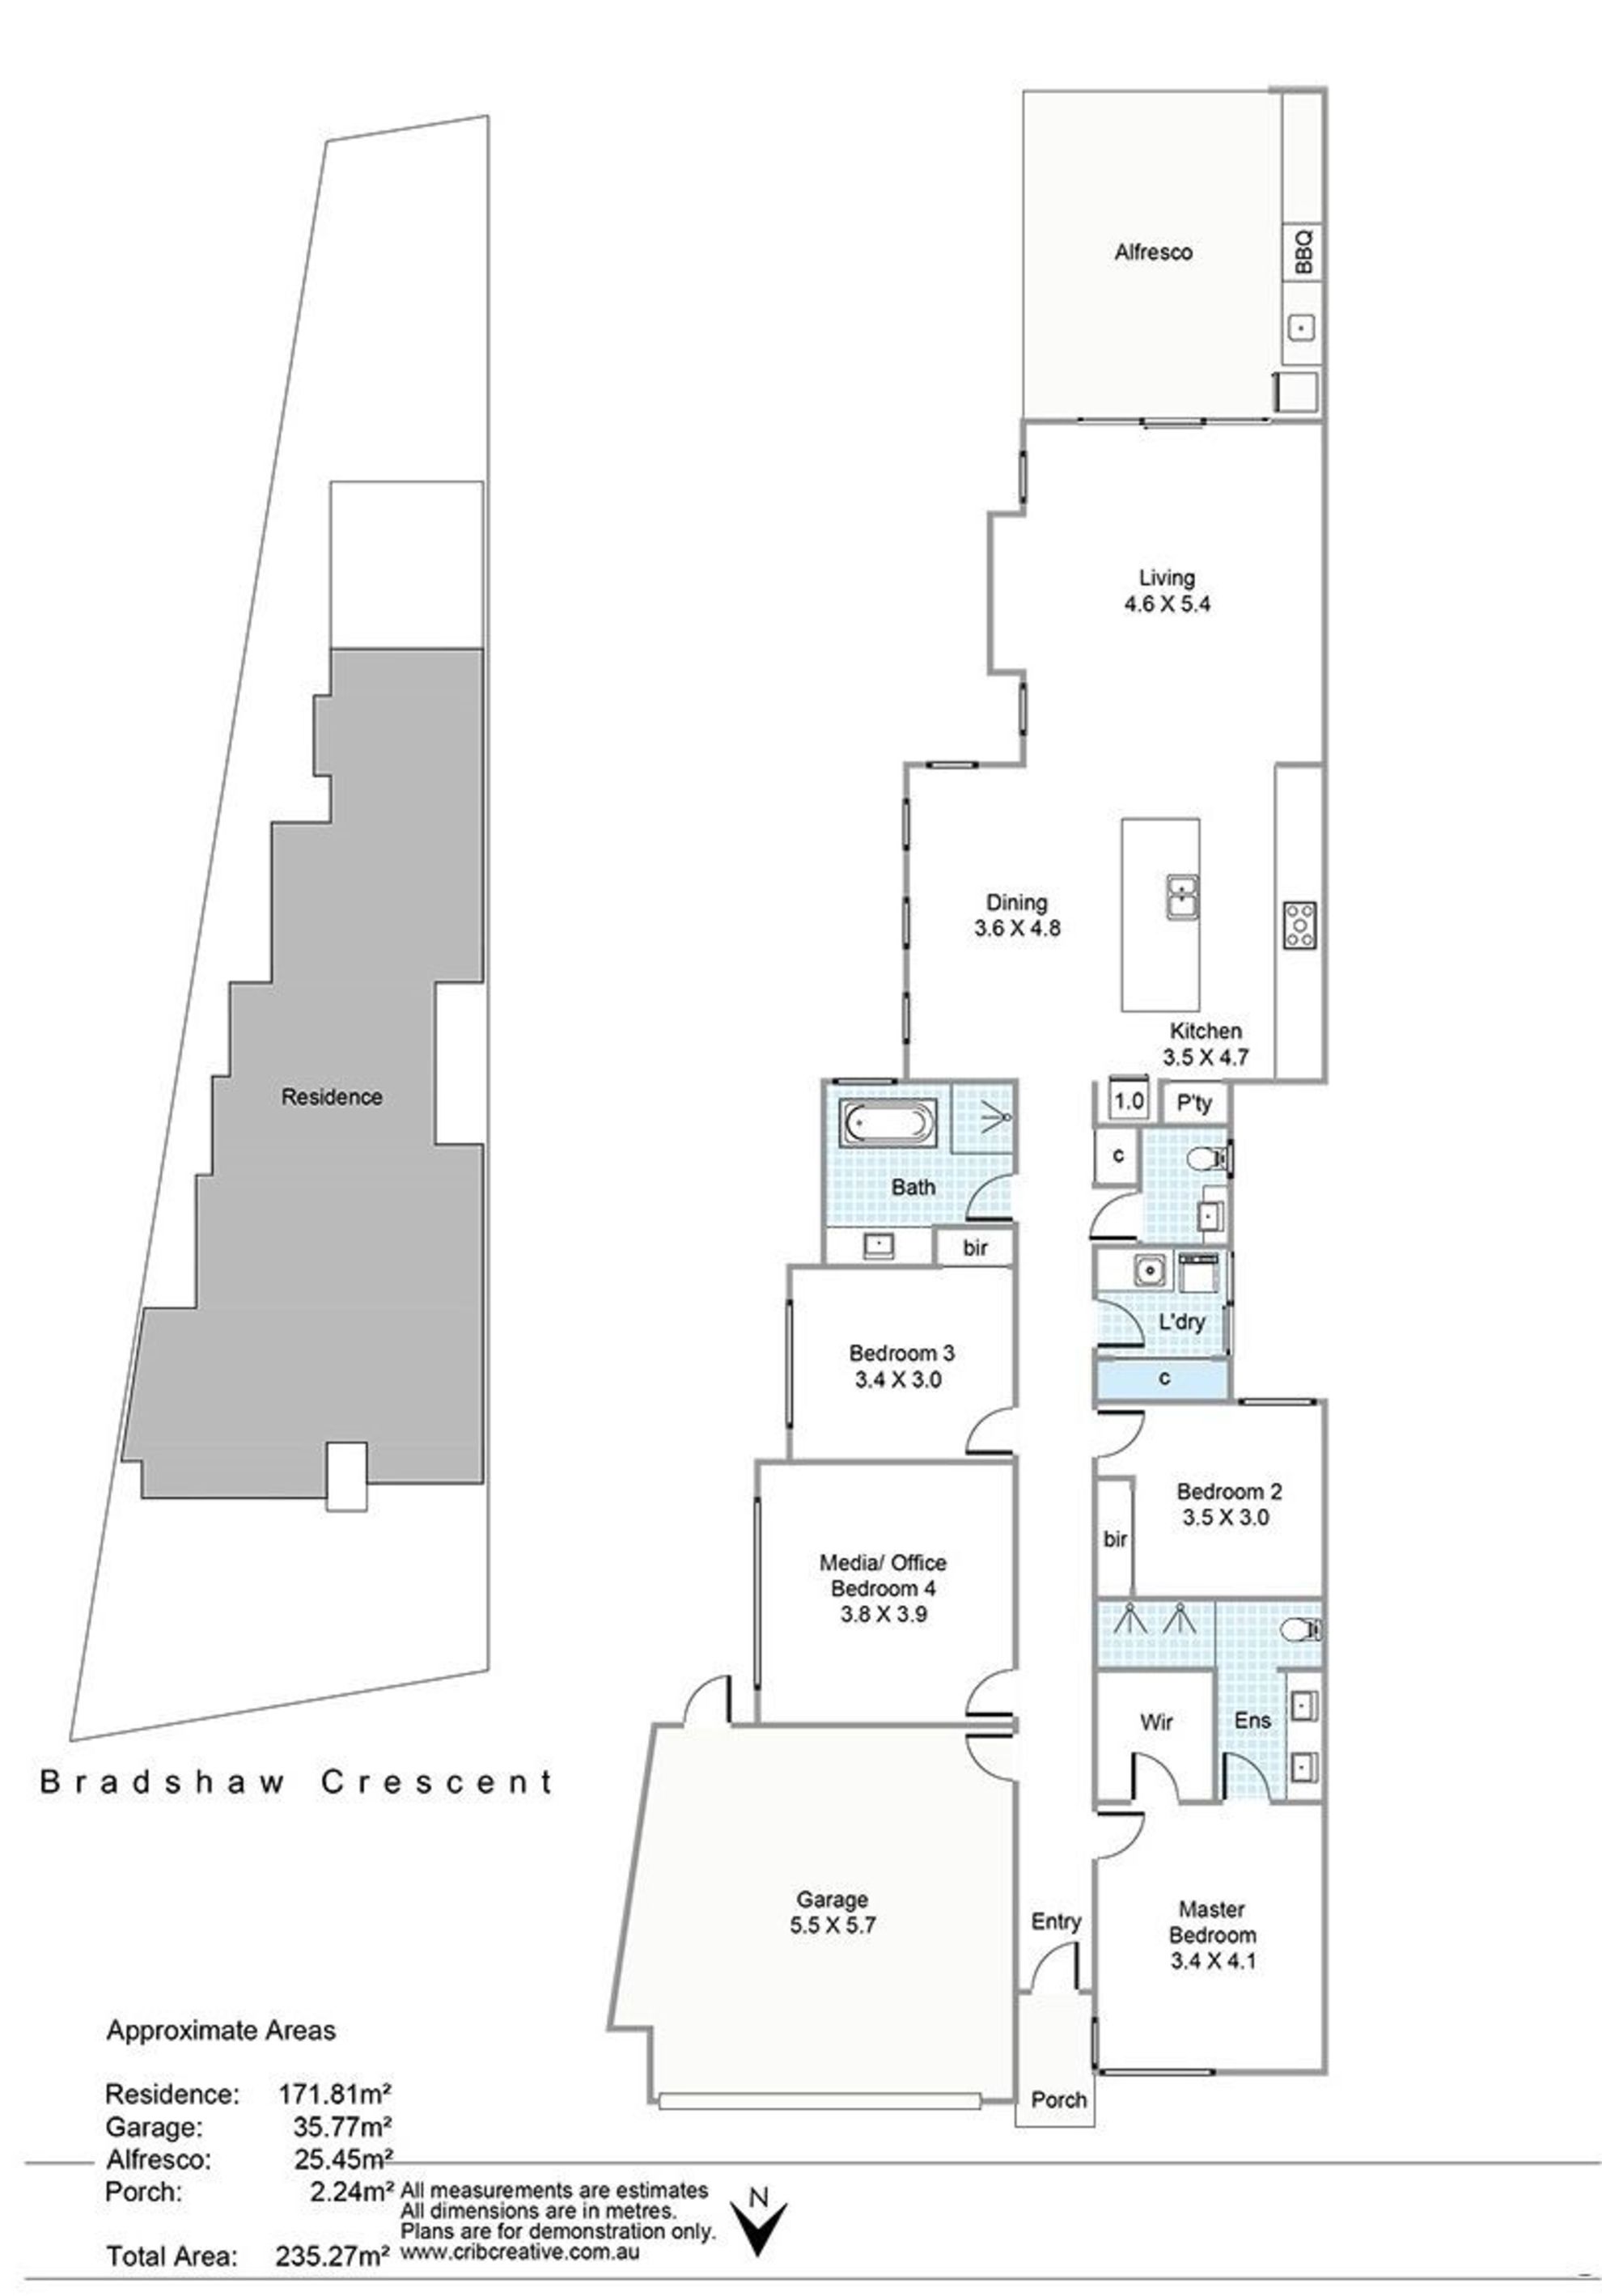 Bradshaw 47a Floor Plan